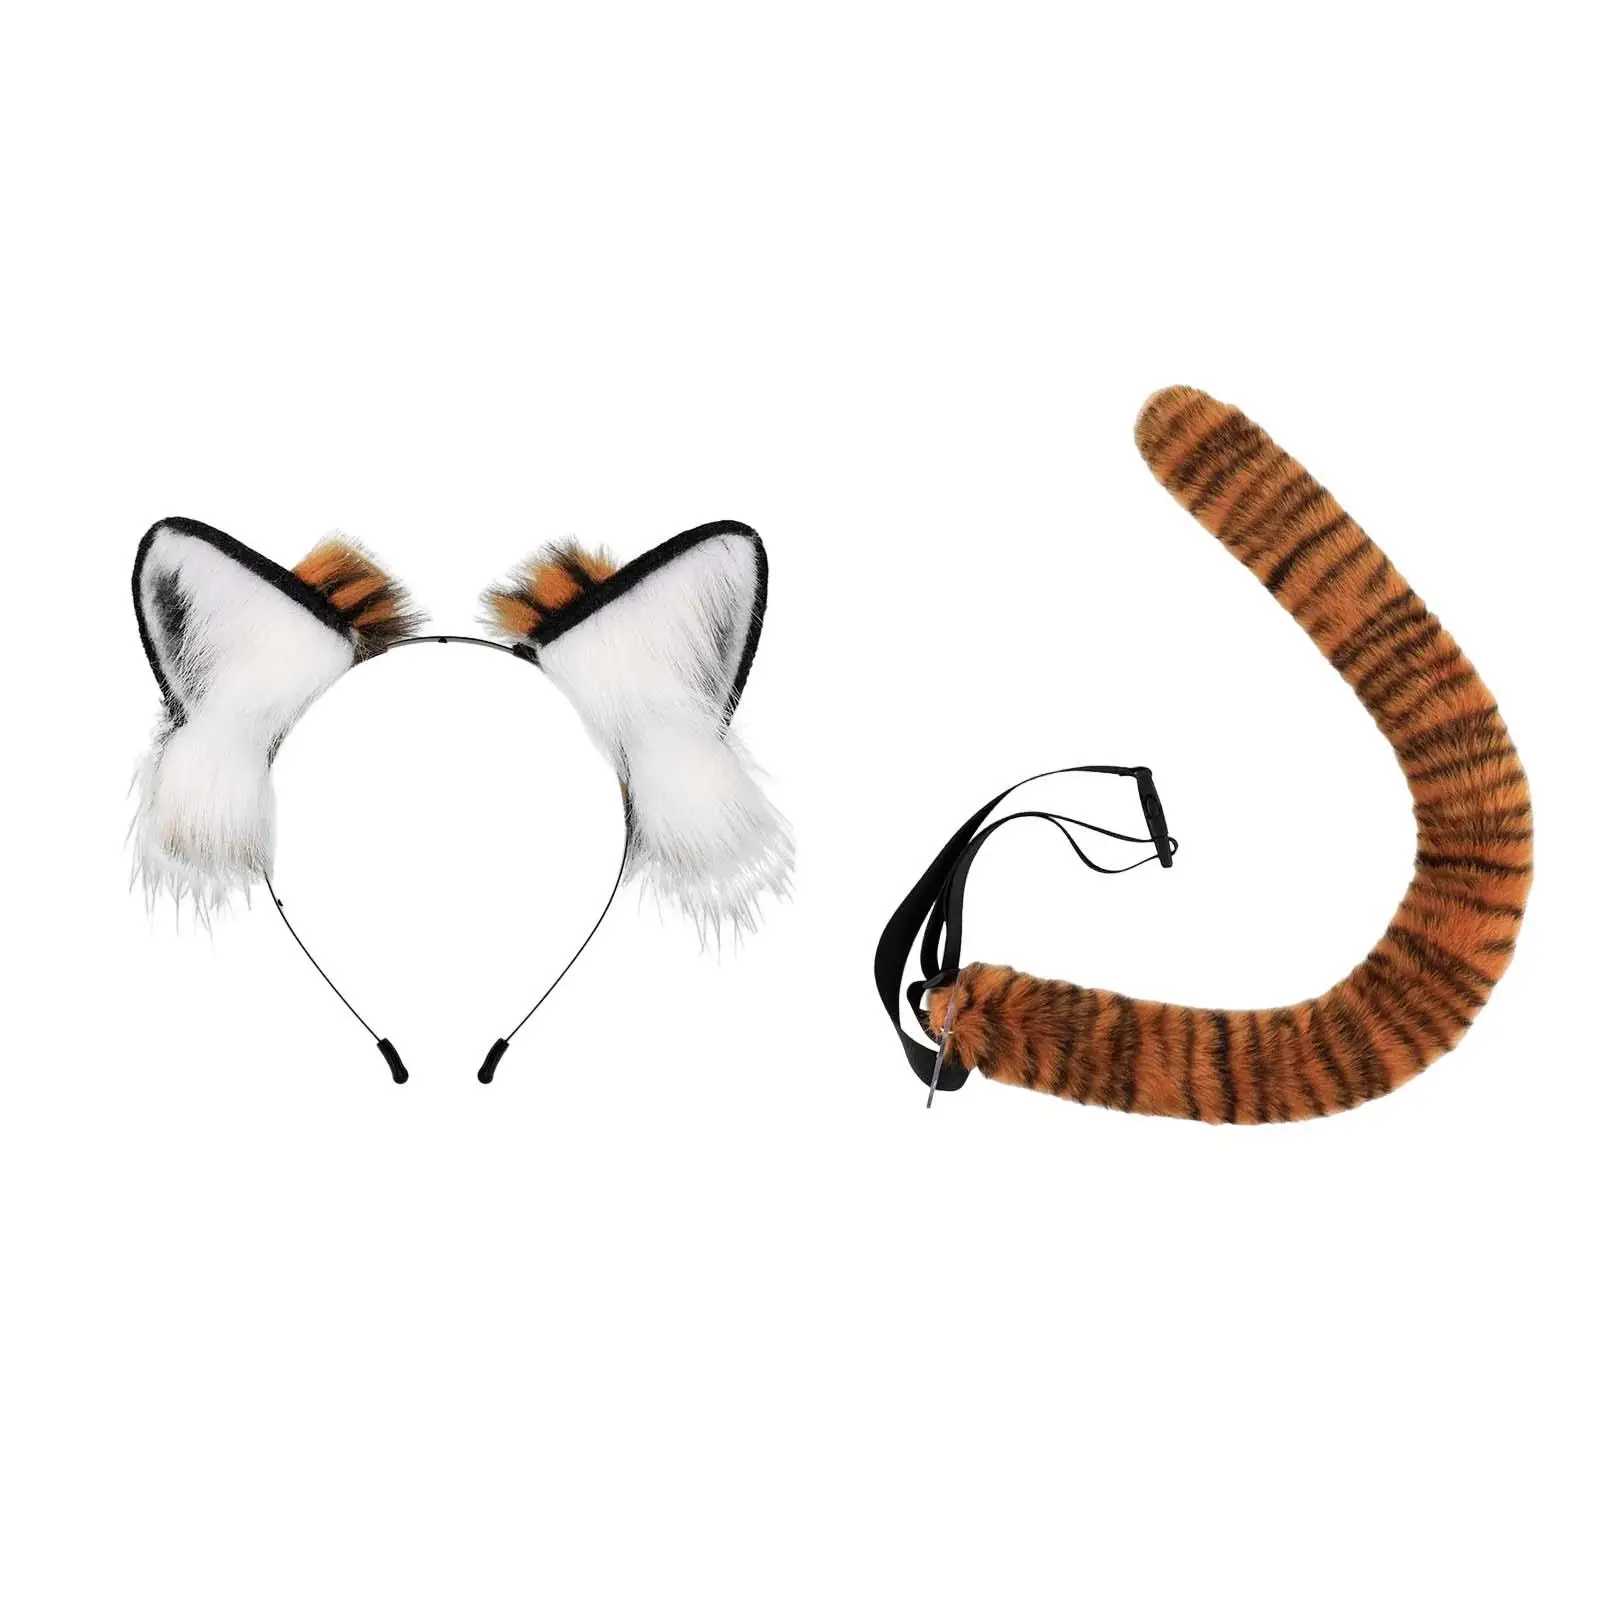 Tiger Ears and Tail Set, Ears Headband Headdress Costume Set for Birthdays Festivals